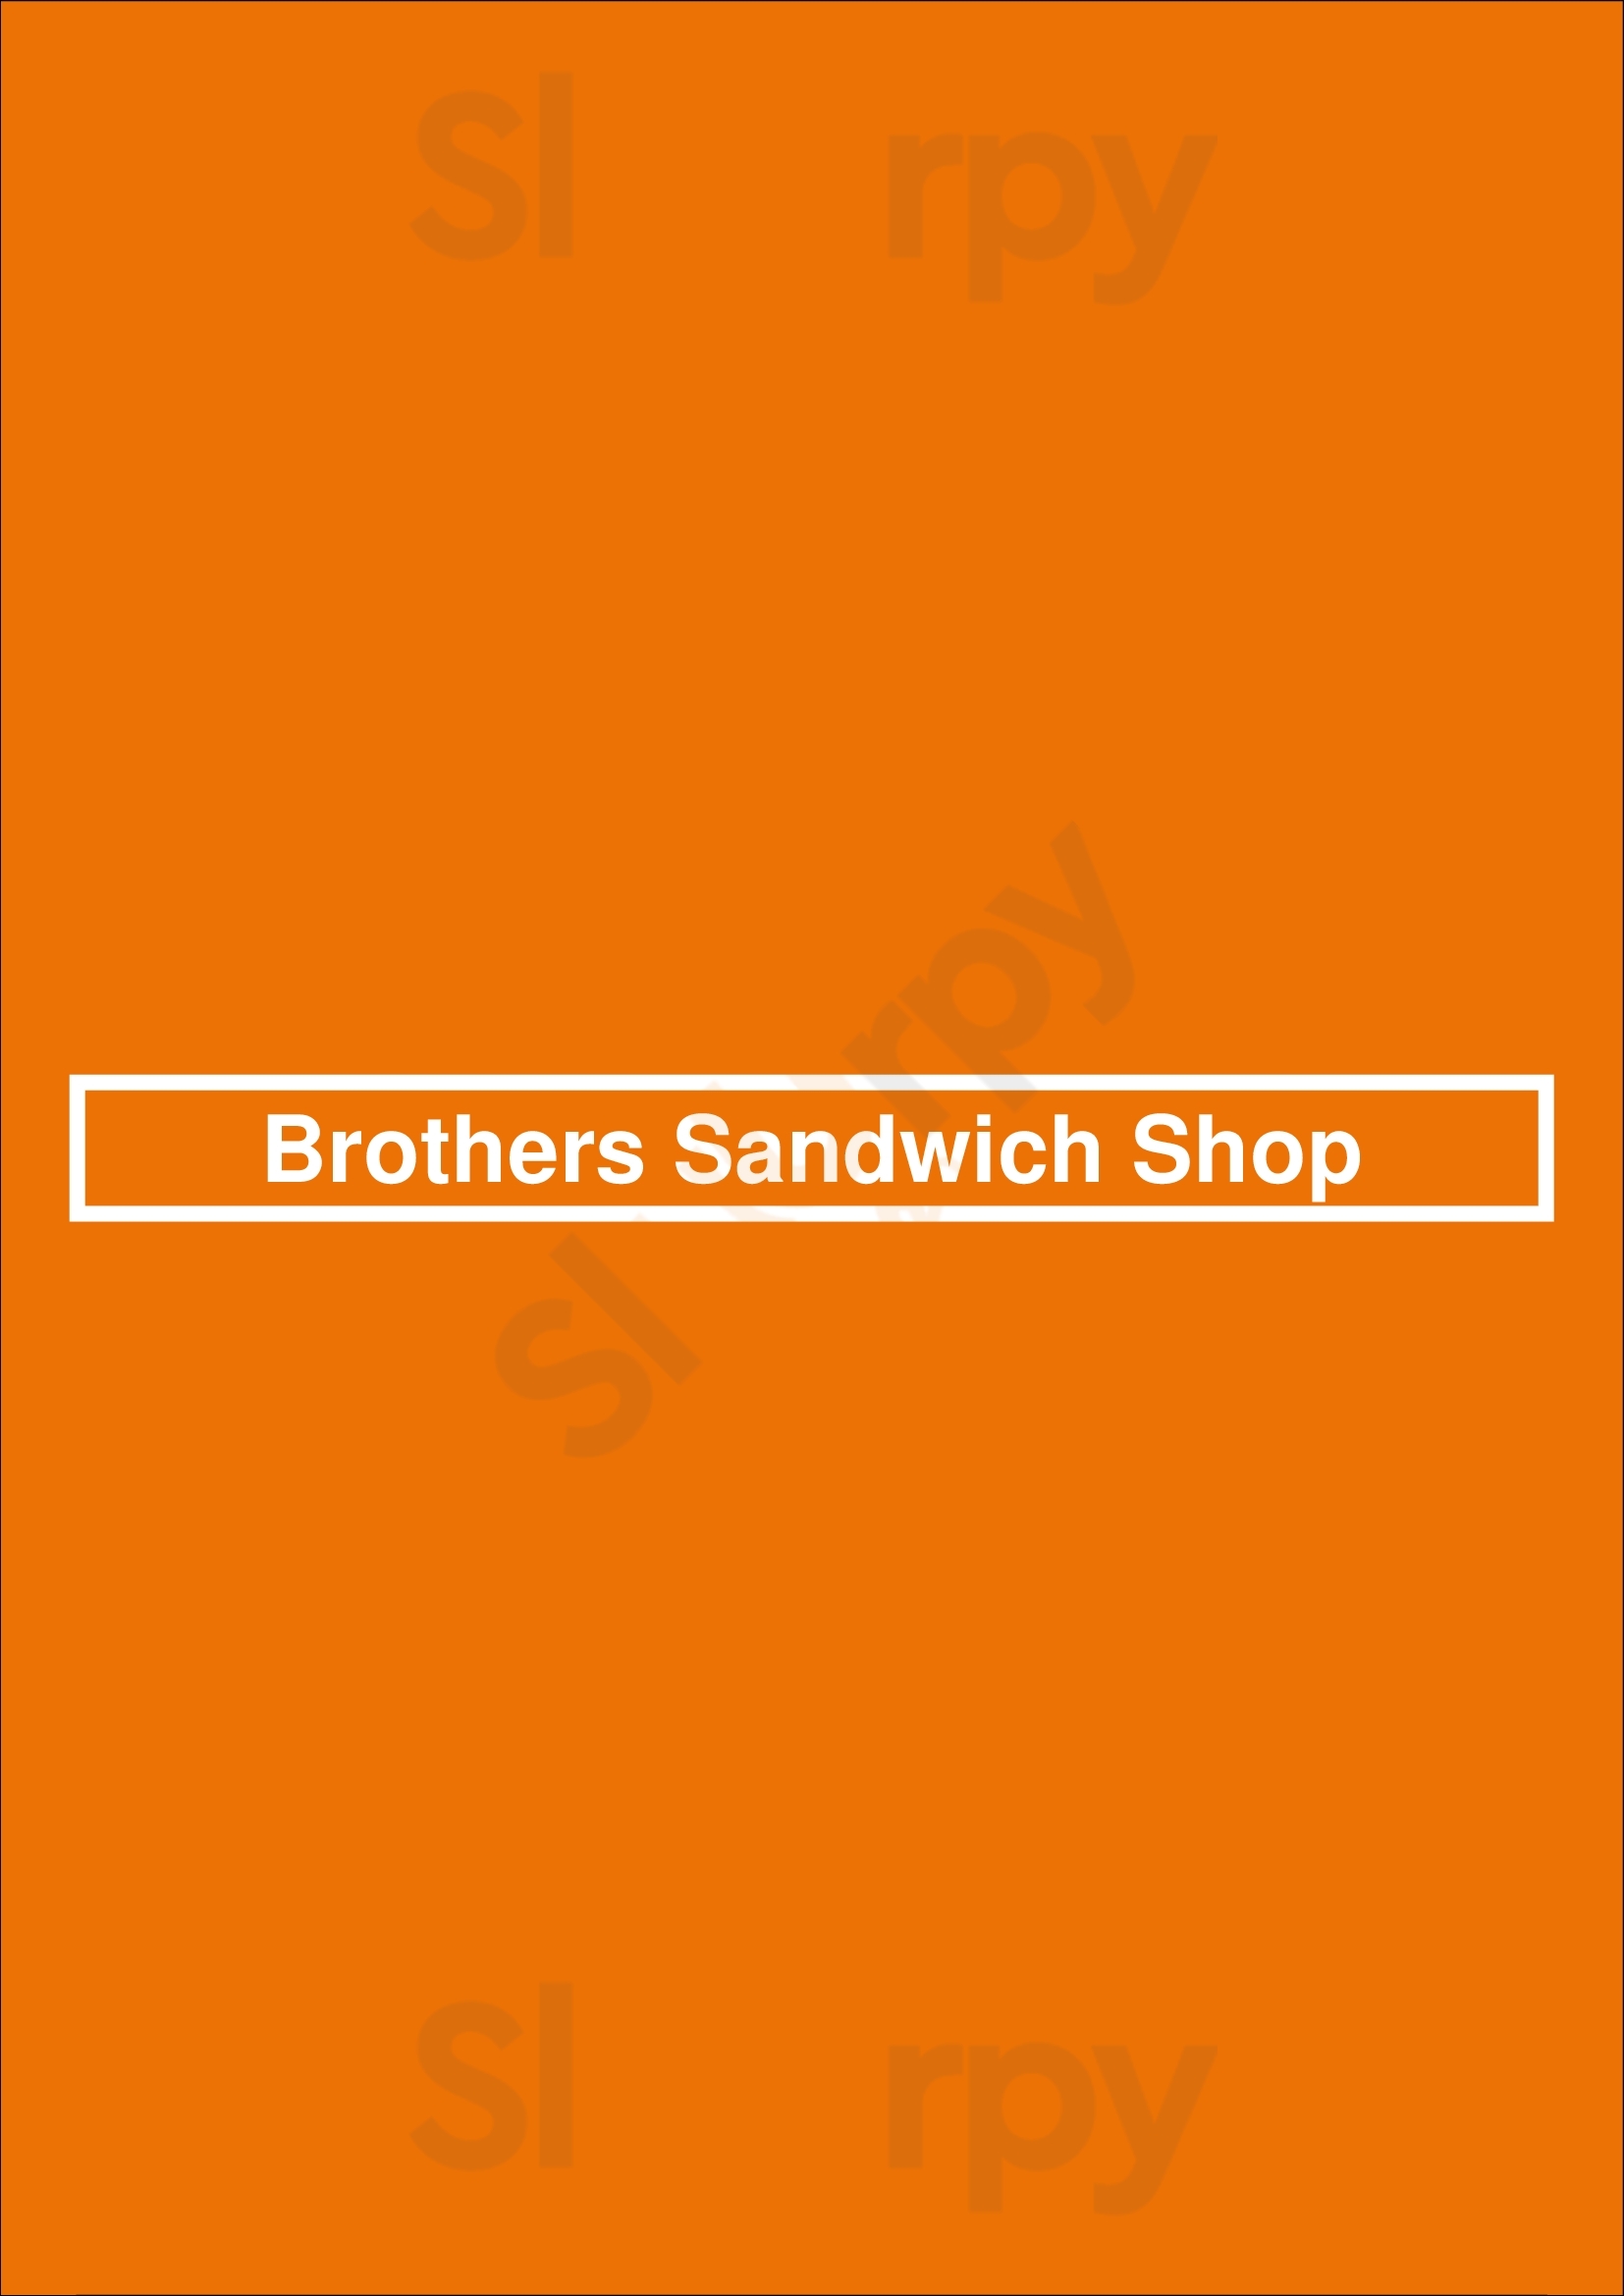 Brothers Sandwich Shop Los Angeles Menu - 1